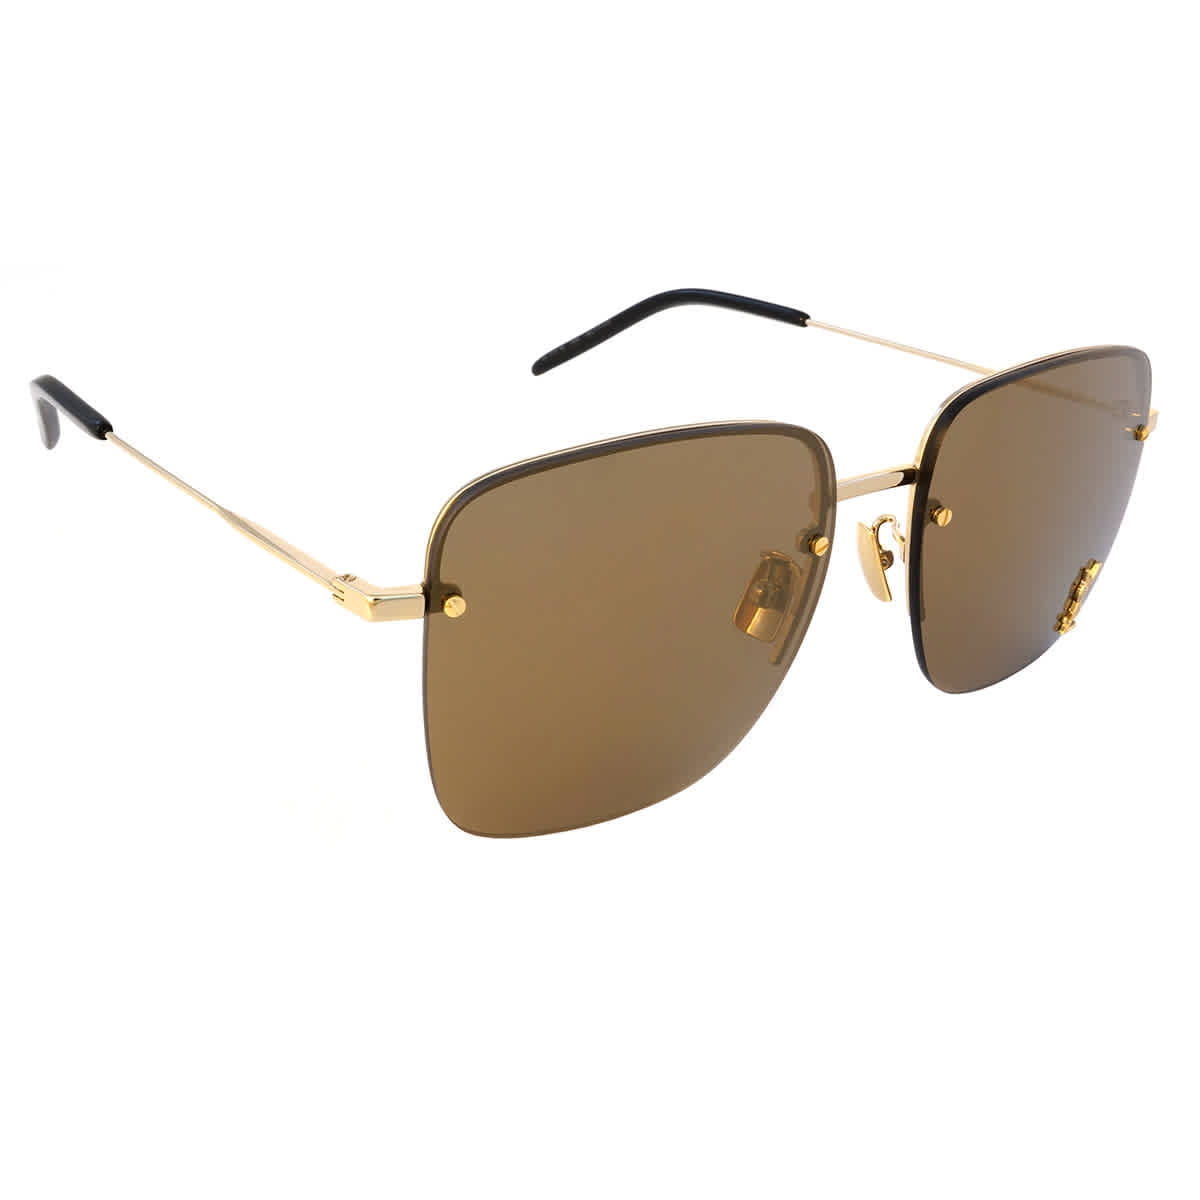 Ysl sl 312 m sunglasses - Saint Laurent - Women